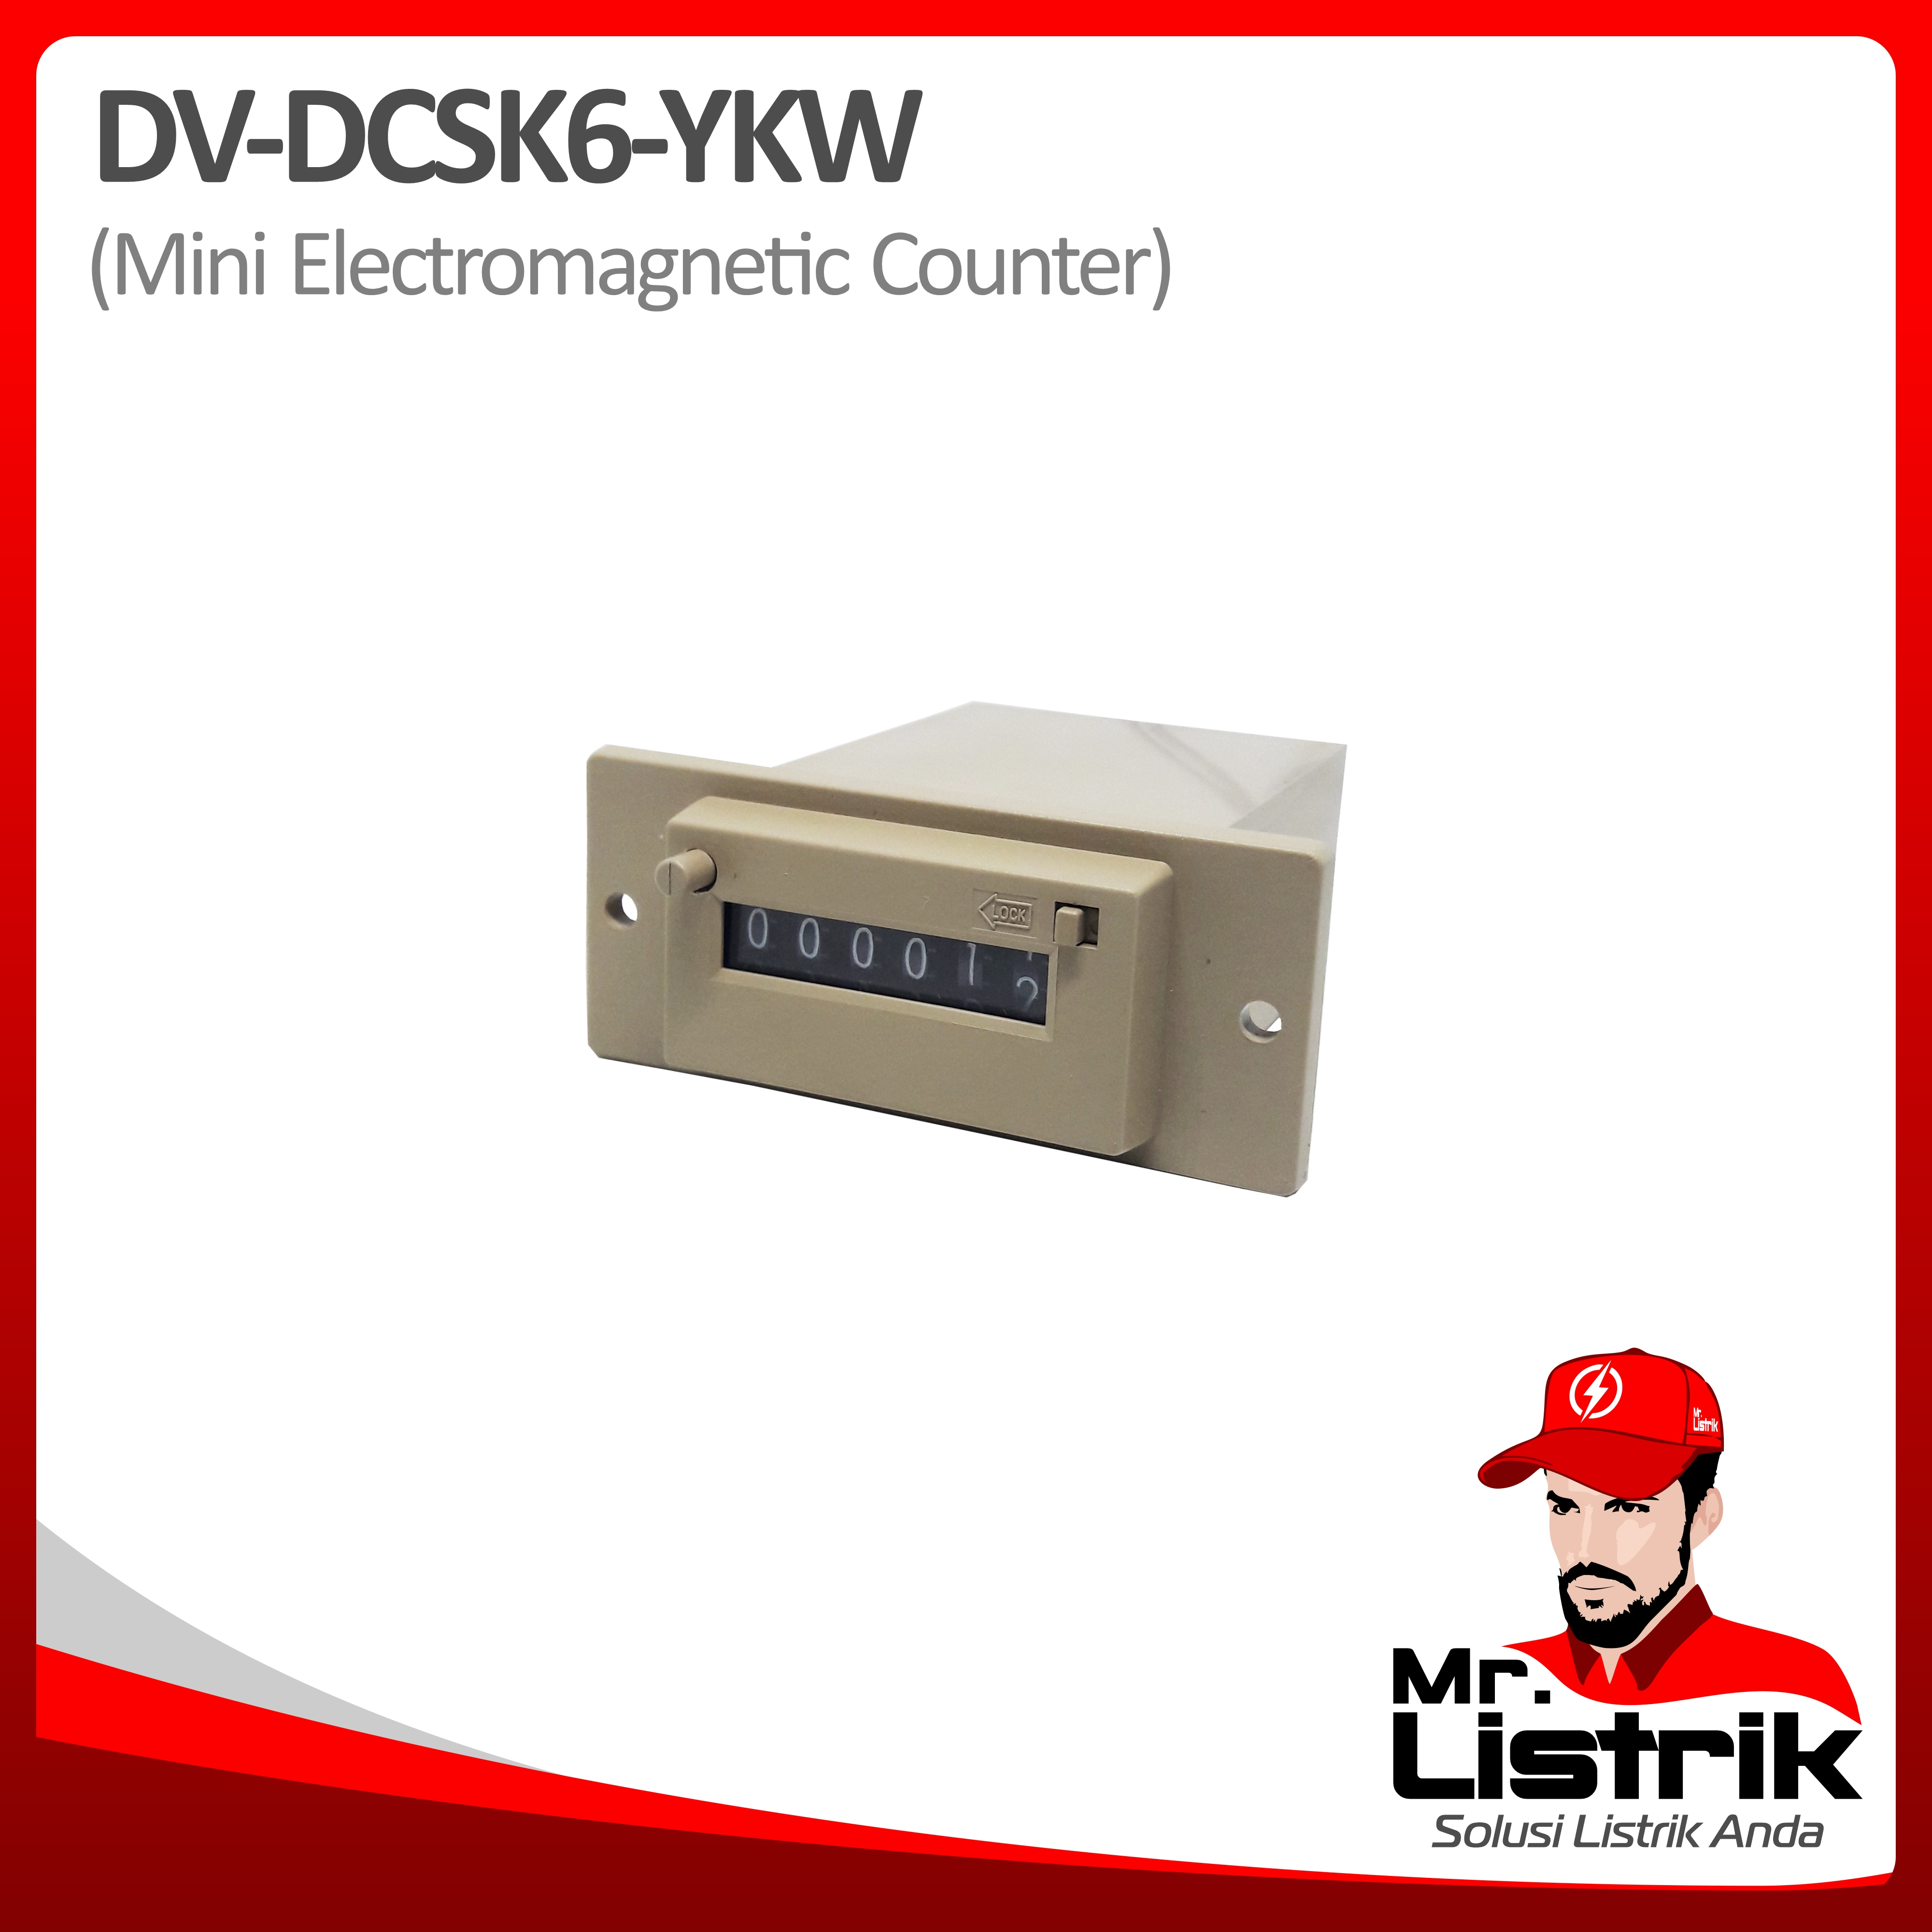 Mini Electromagnetic Counter DV DCSK6-YKW